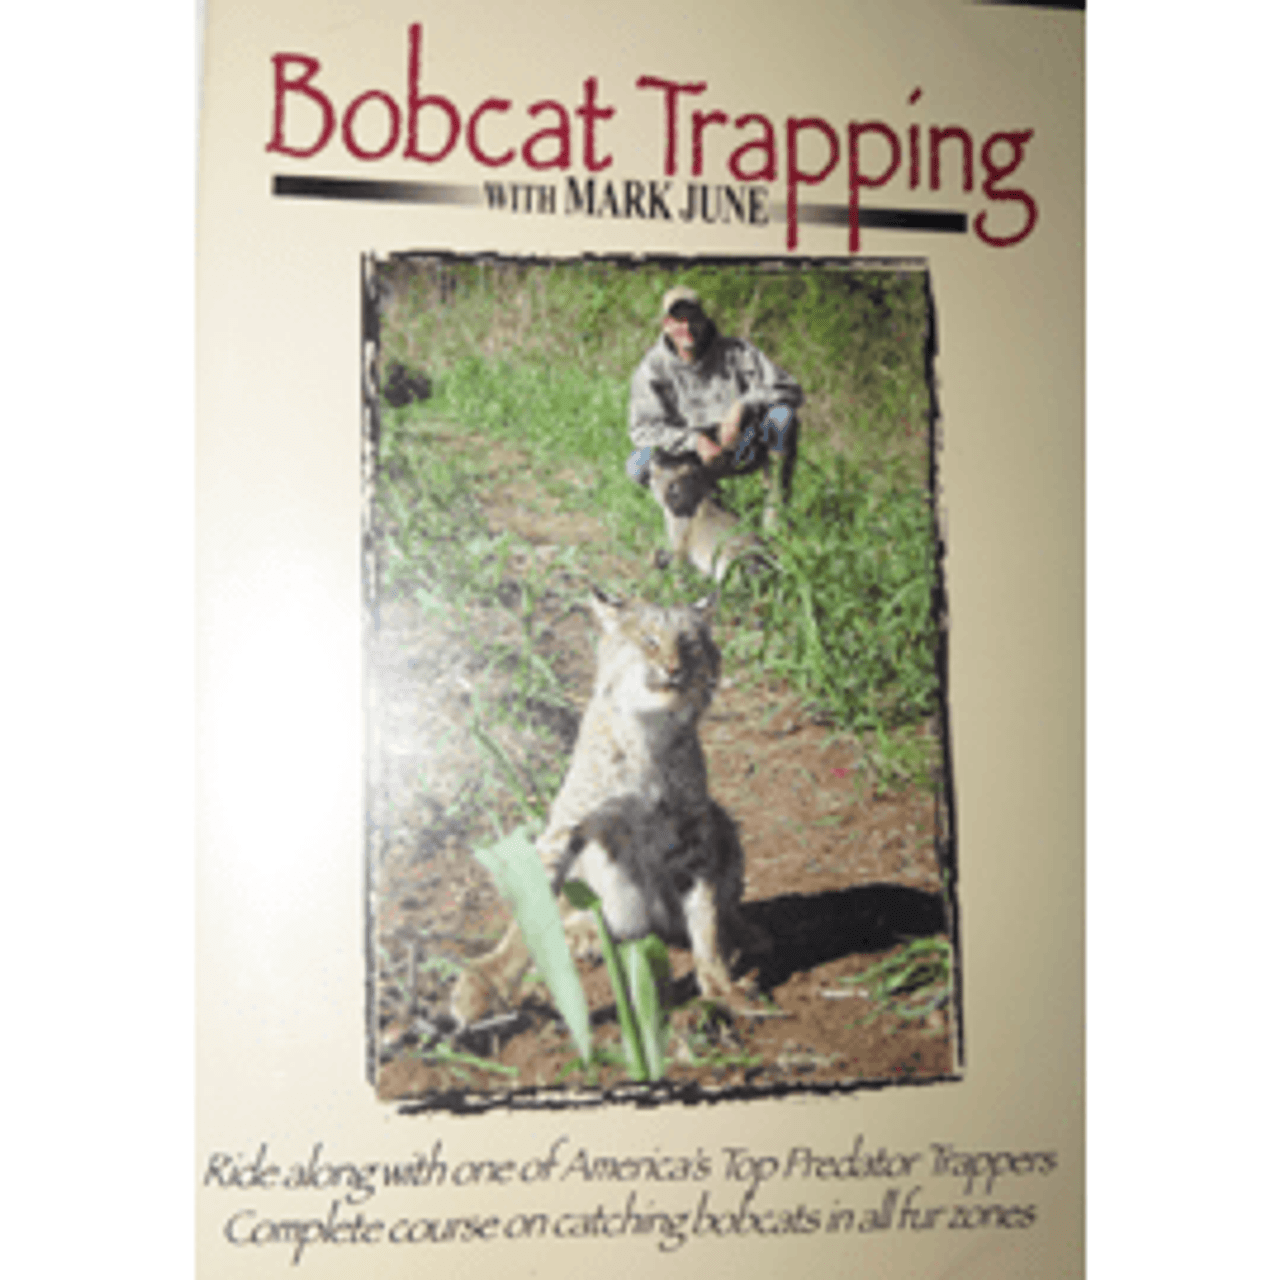 Mark June Bobcat Trapping DVD